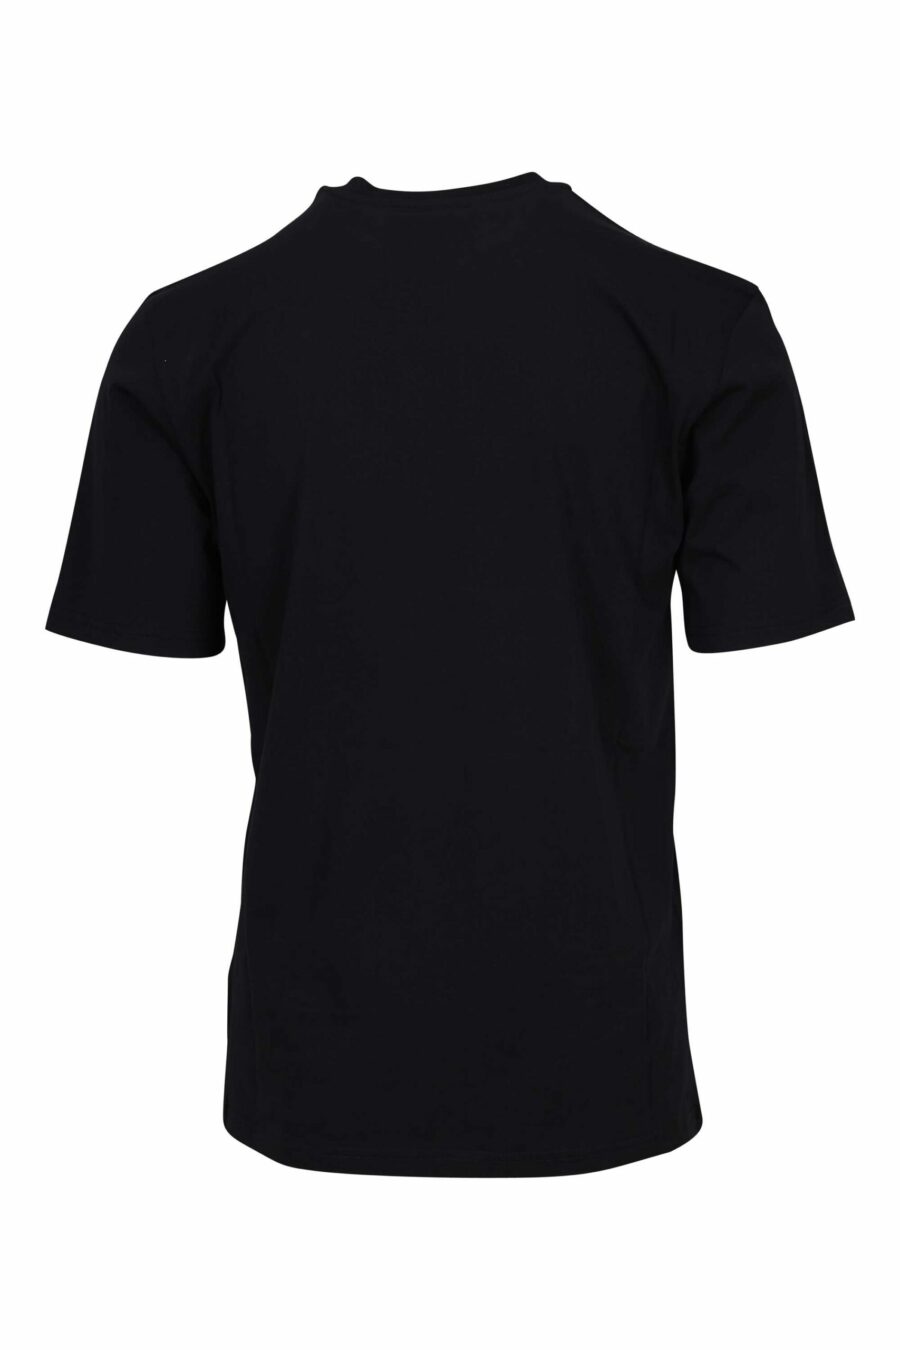 Black organic cotton T-shirt "100% pure moschino" - 667113765150 1 scaled